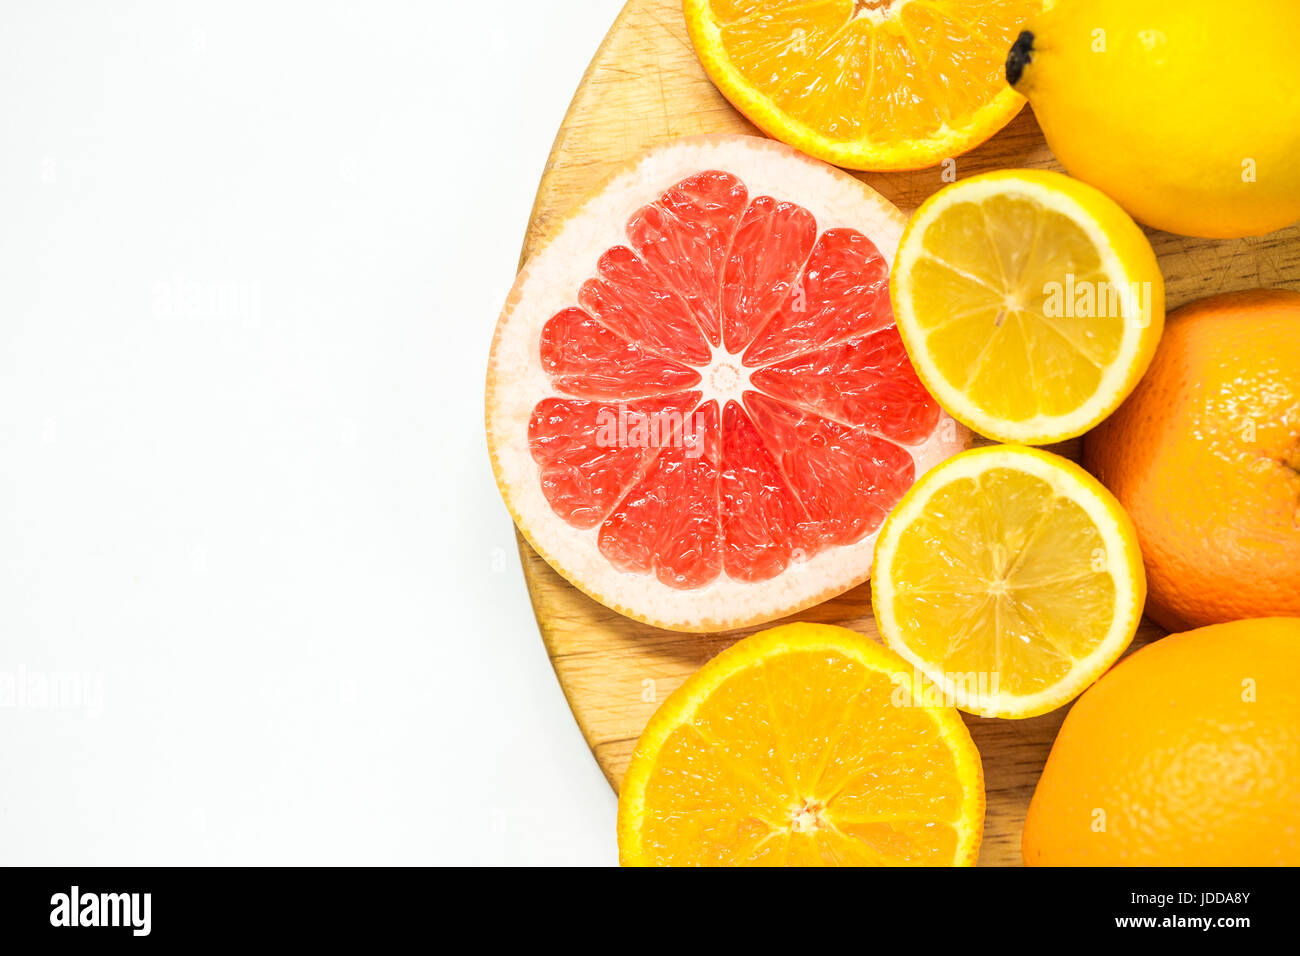 Vitamin C fruits - lemon, orange and grapefruits slices on woden cutting board on white background Stock Photo